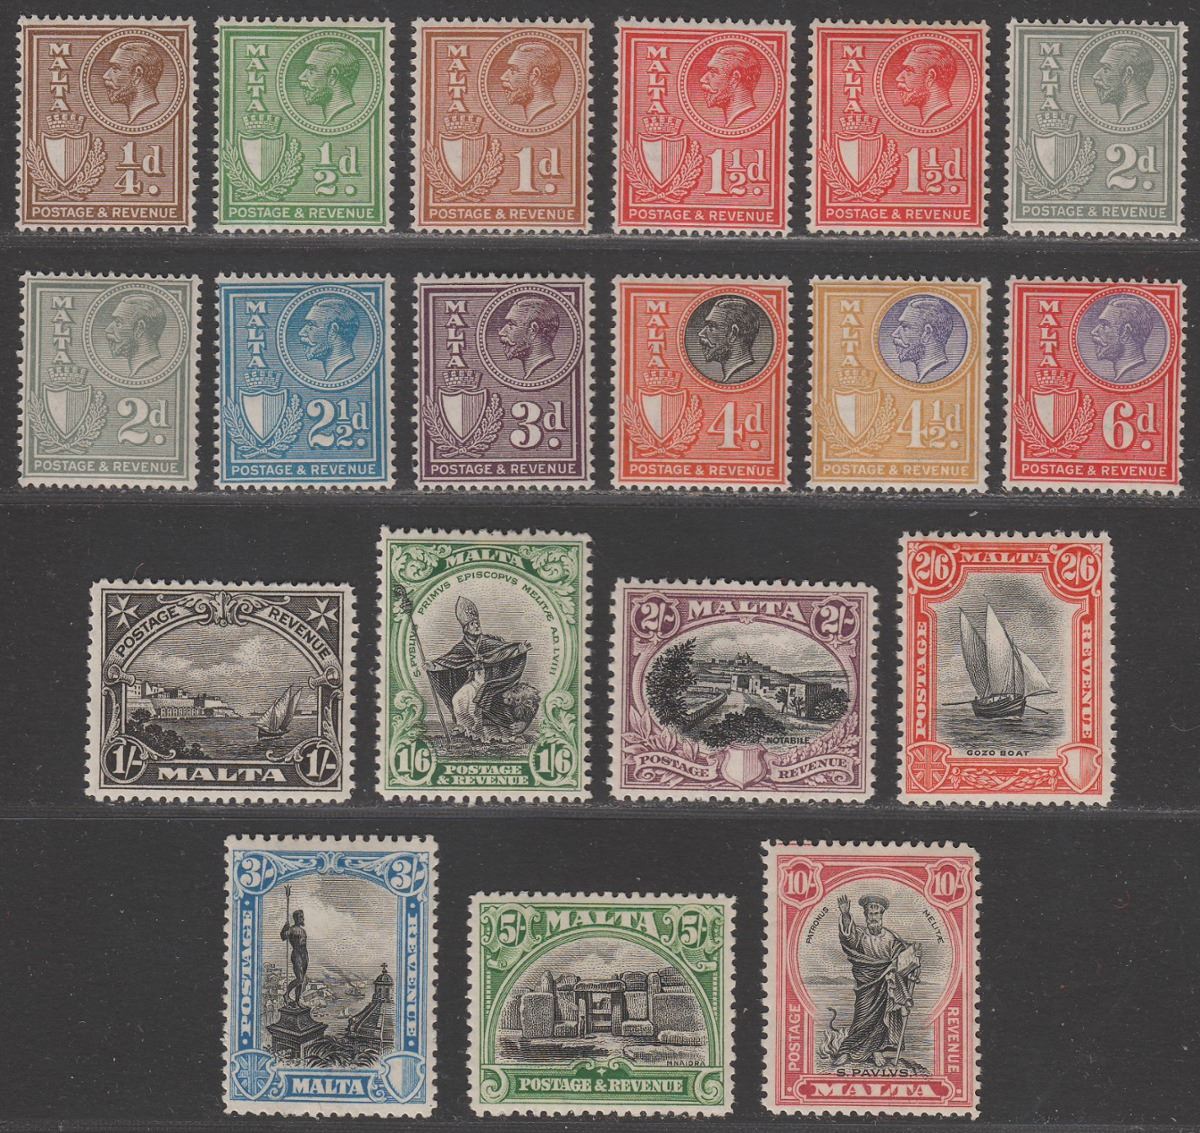 Malta 1930 King George V Postage and Revenue Set Mint SG193-209 cat £225